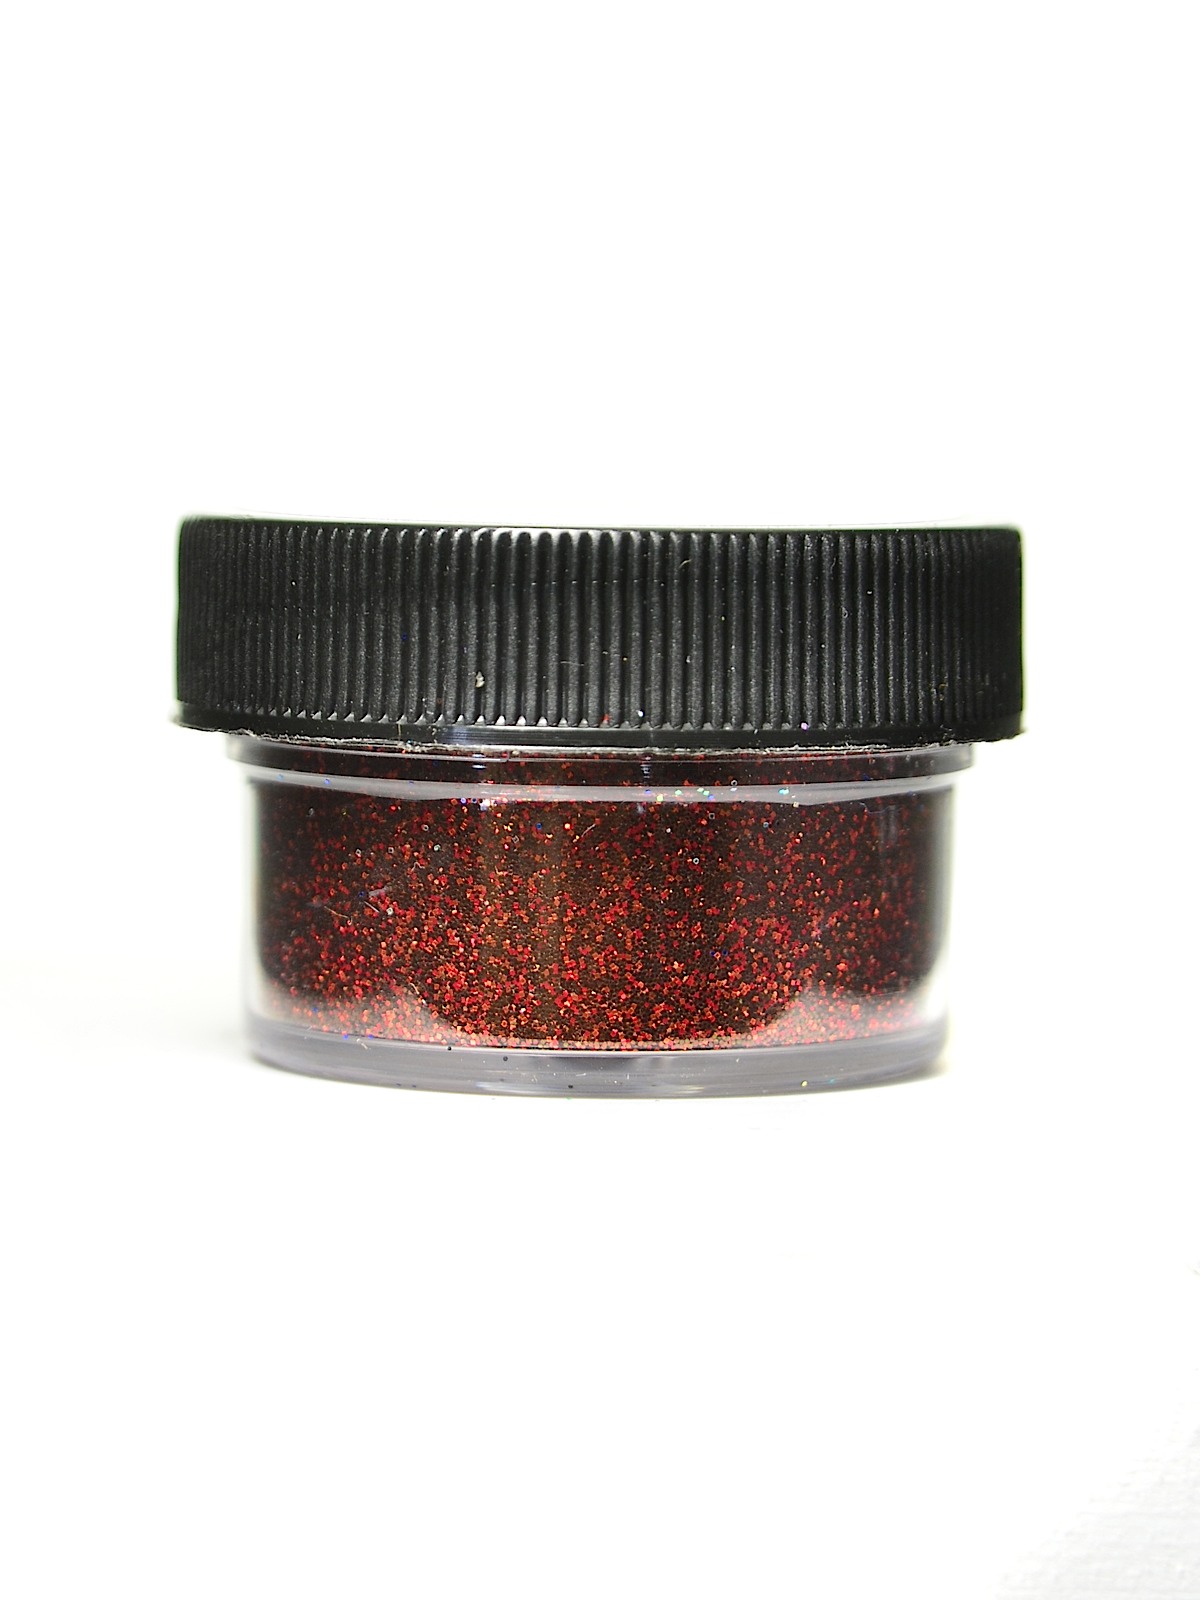 Ultrafine Opaque Glitter Nutmeg 1 2 Oz. Jar